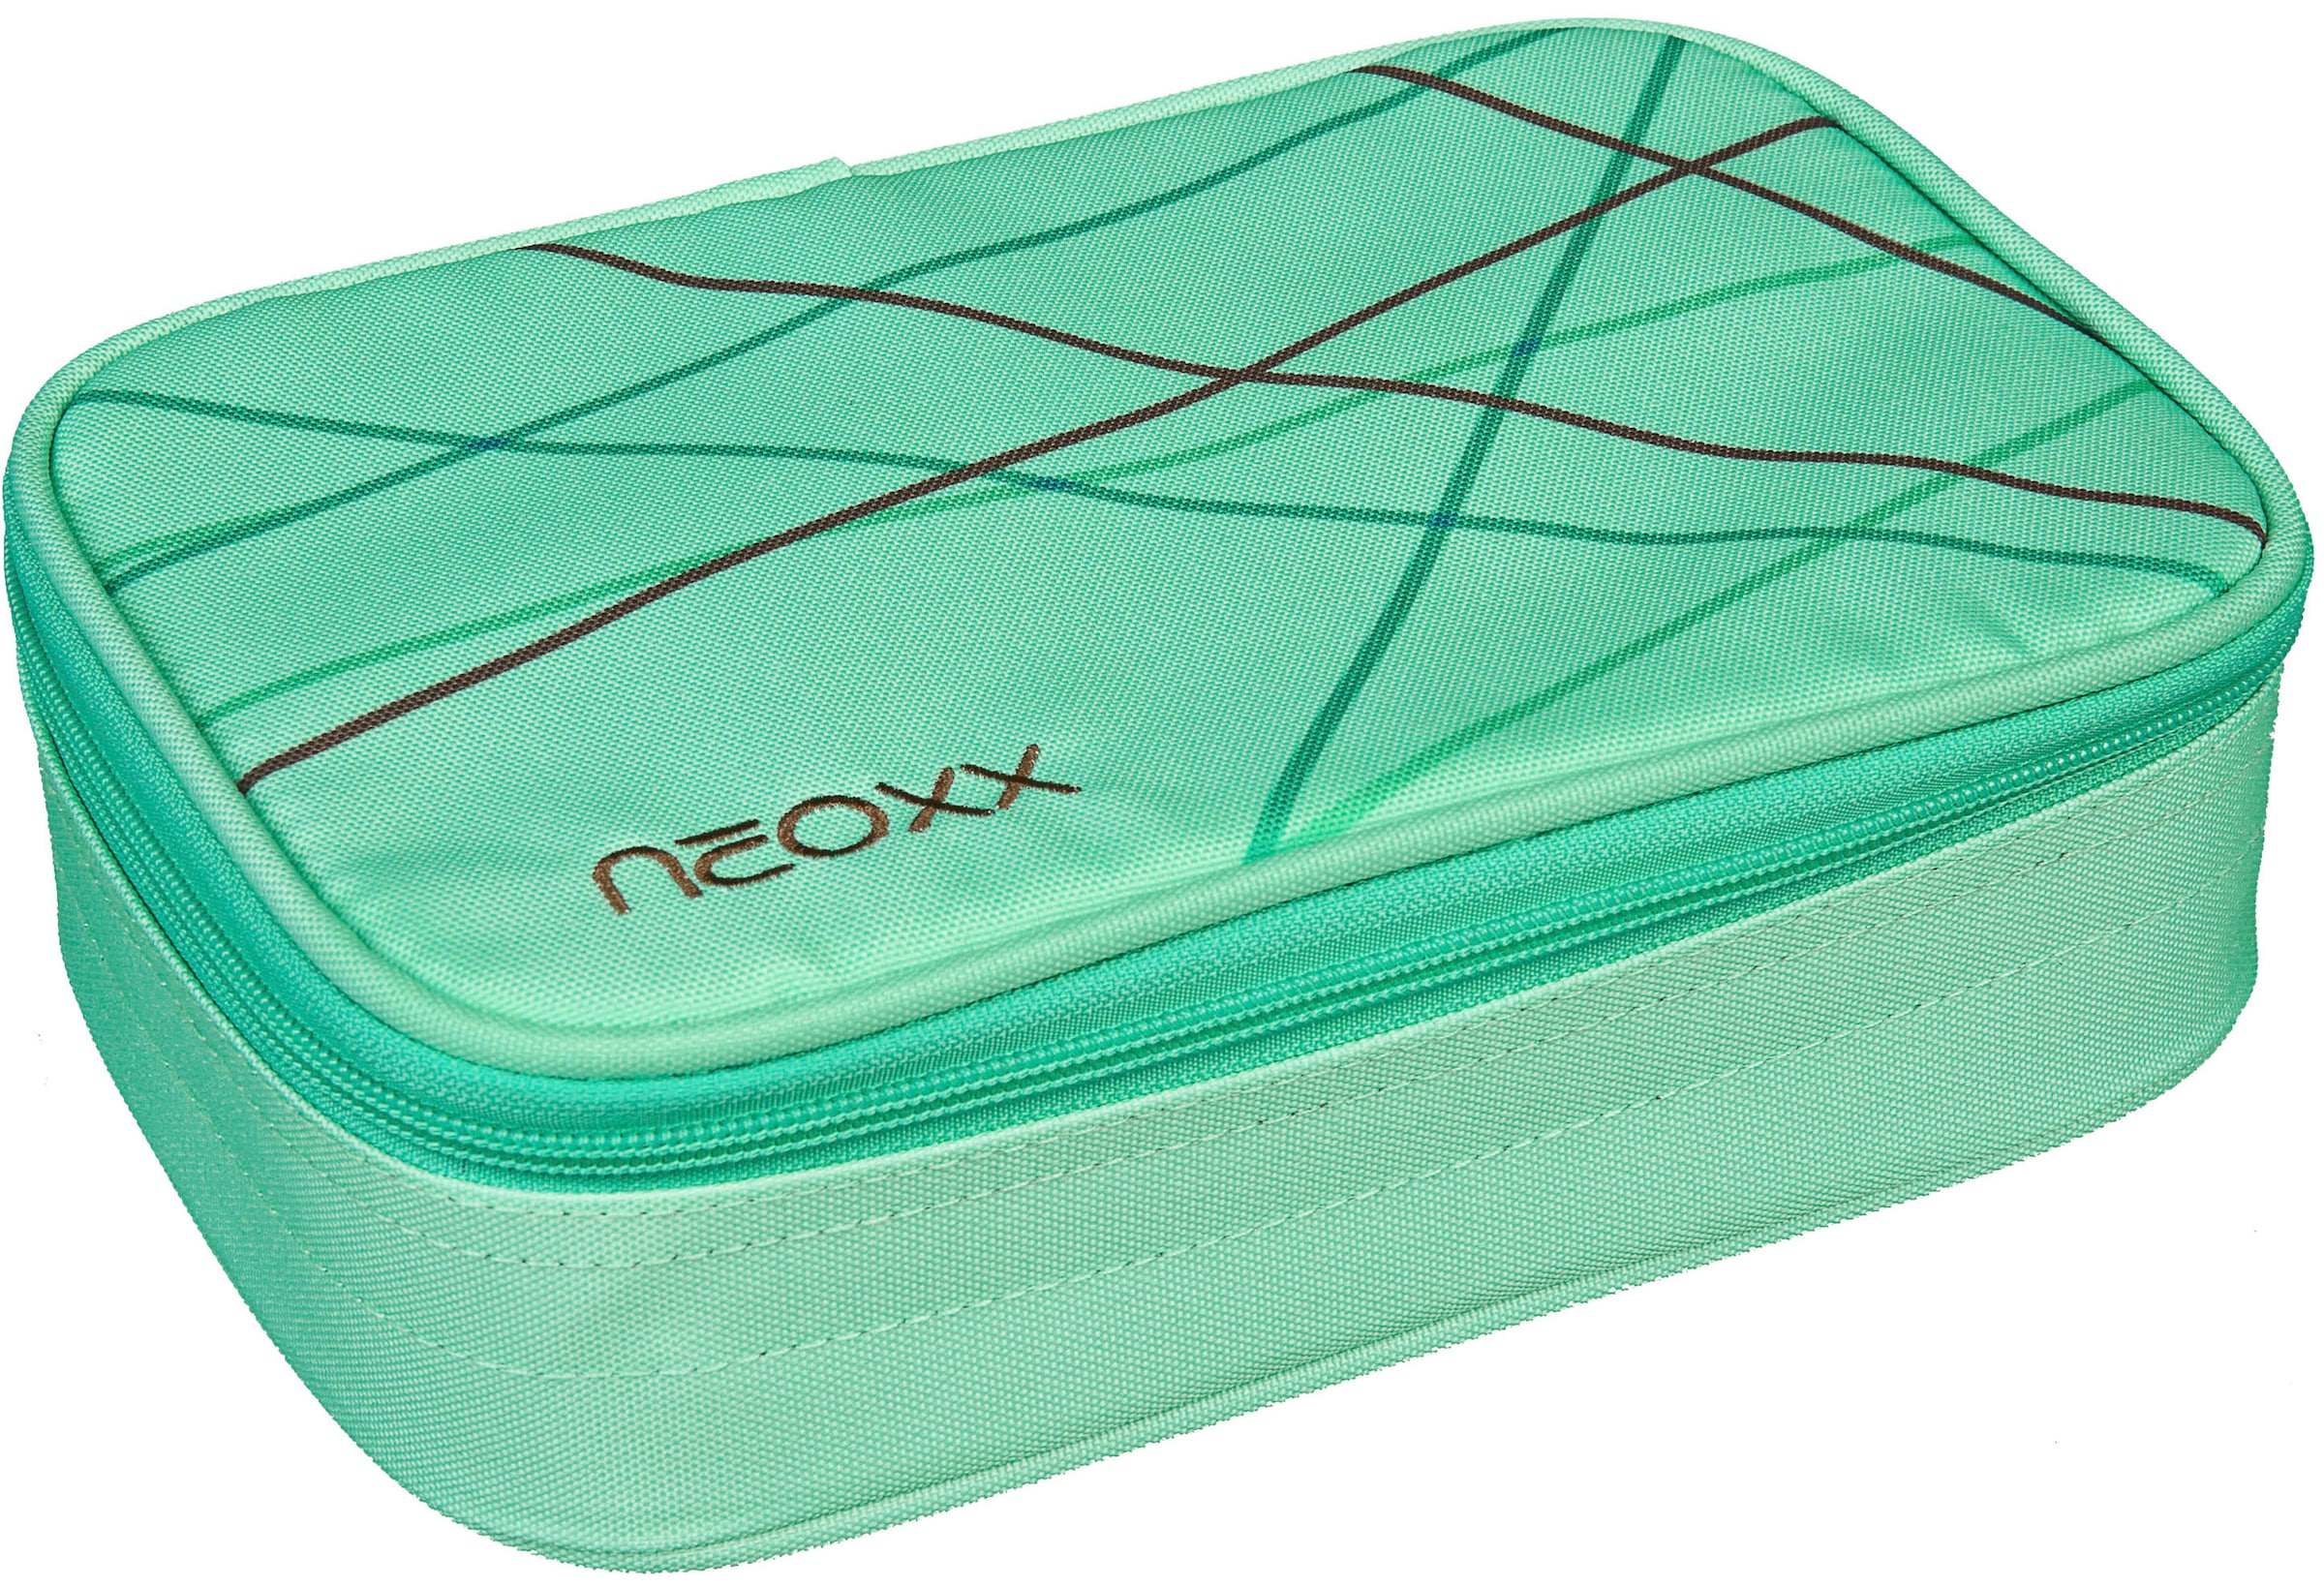 Modische neoxx Schreibgeräteetui »Schlamperbox, Dunk, Mint to be«,  teilweise aus recyceltem Material versandkostenfrei shoppen